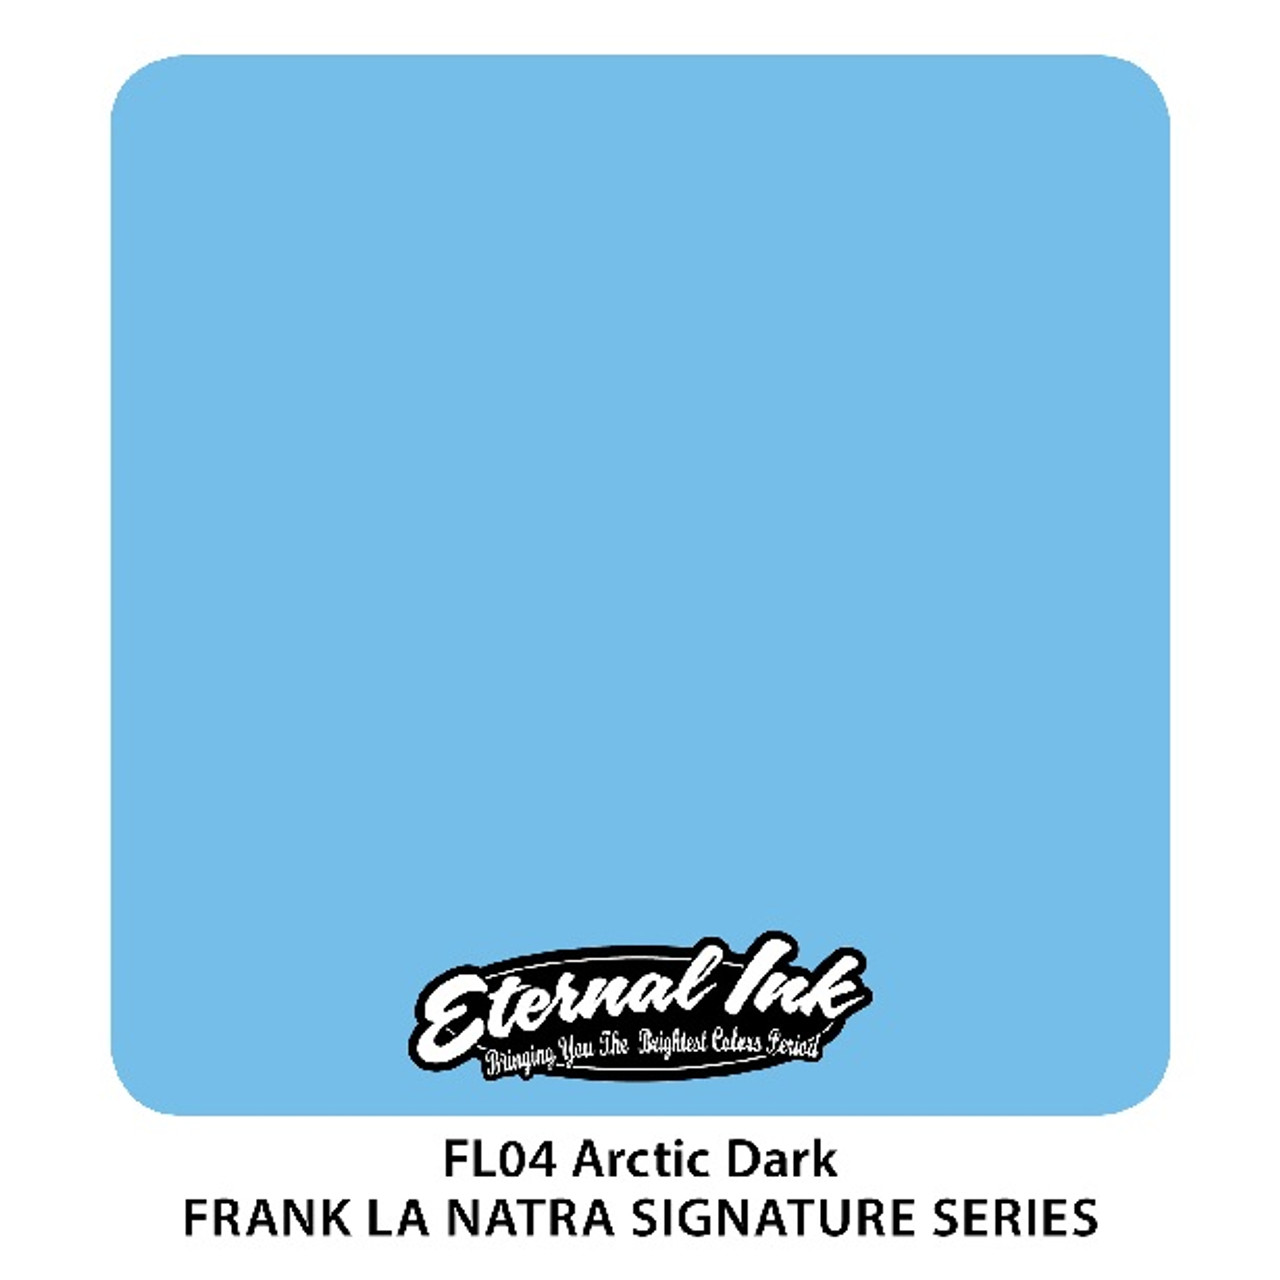 Frank La Natra Arctic Dark, 1oz.